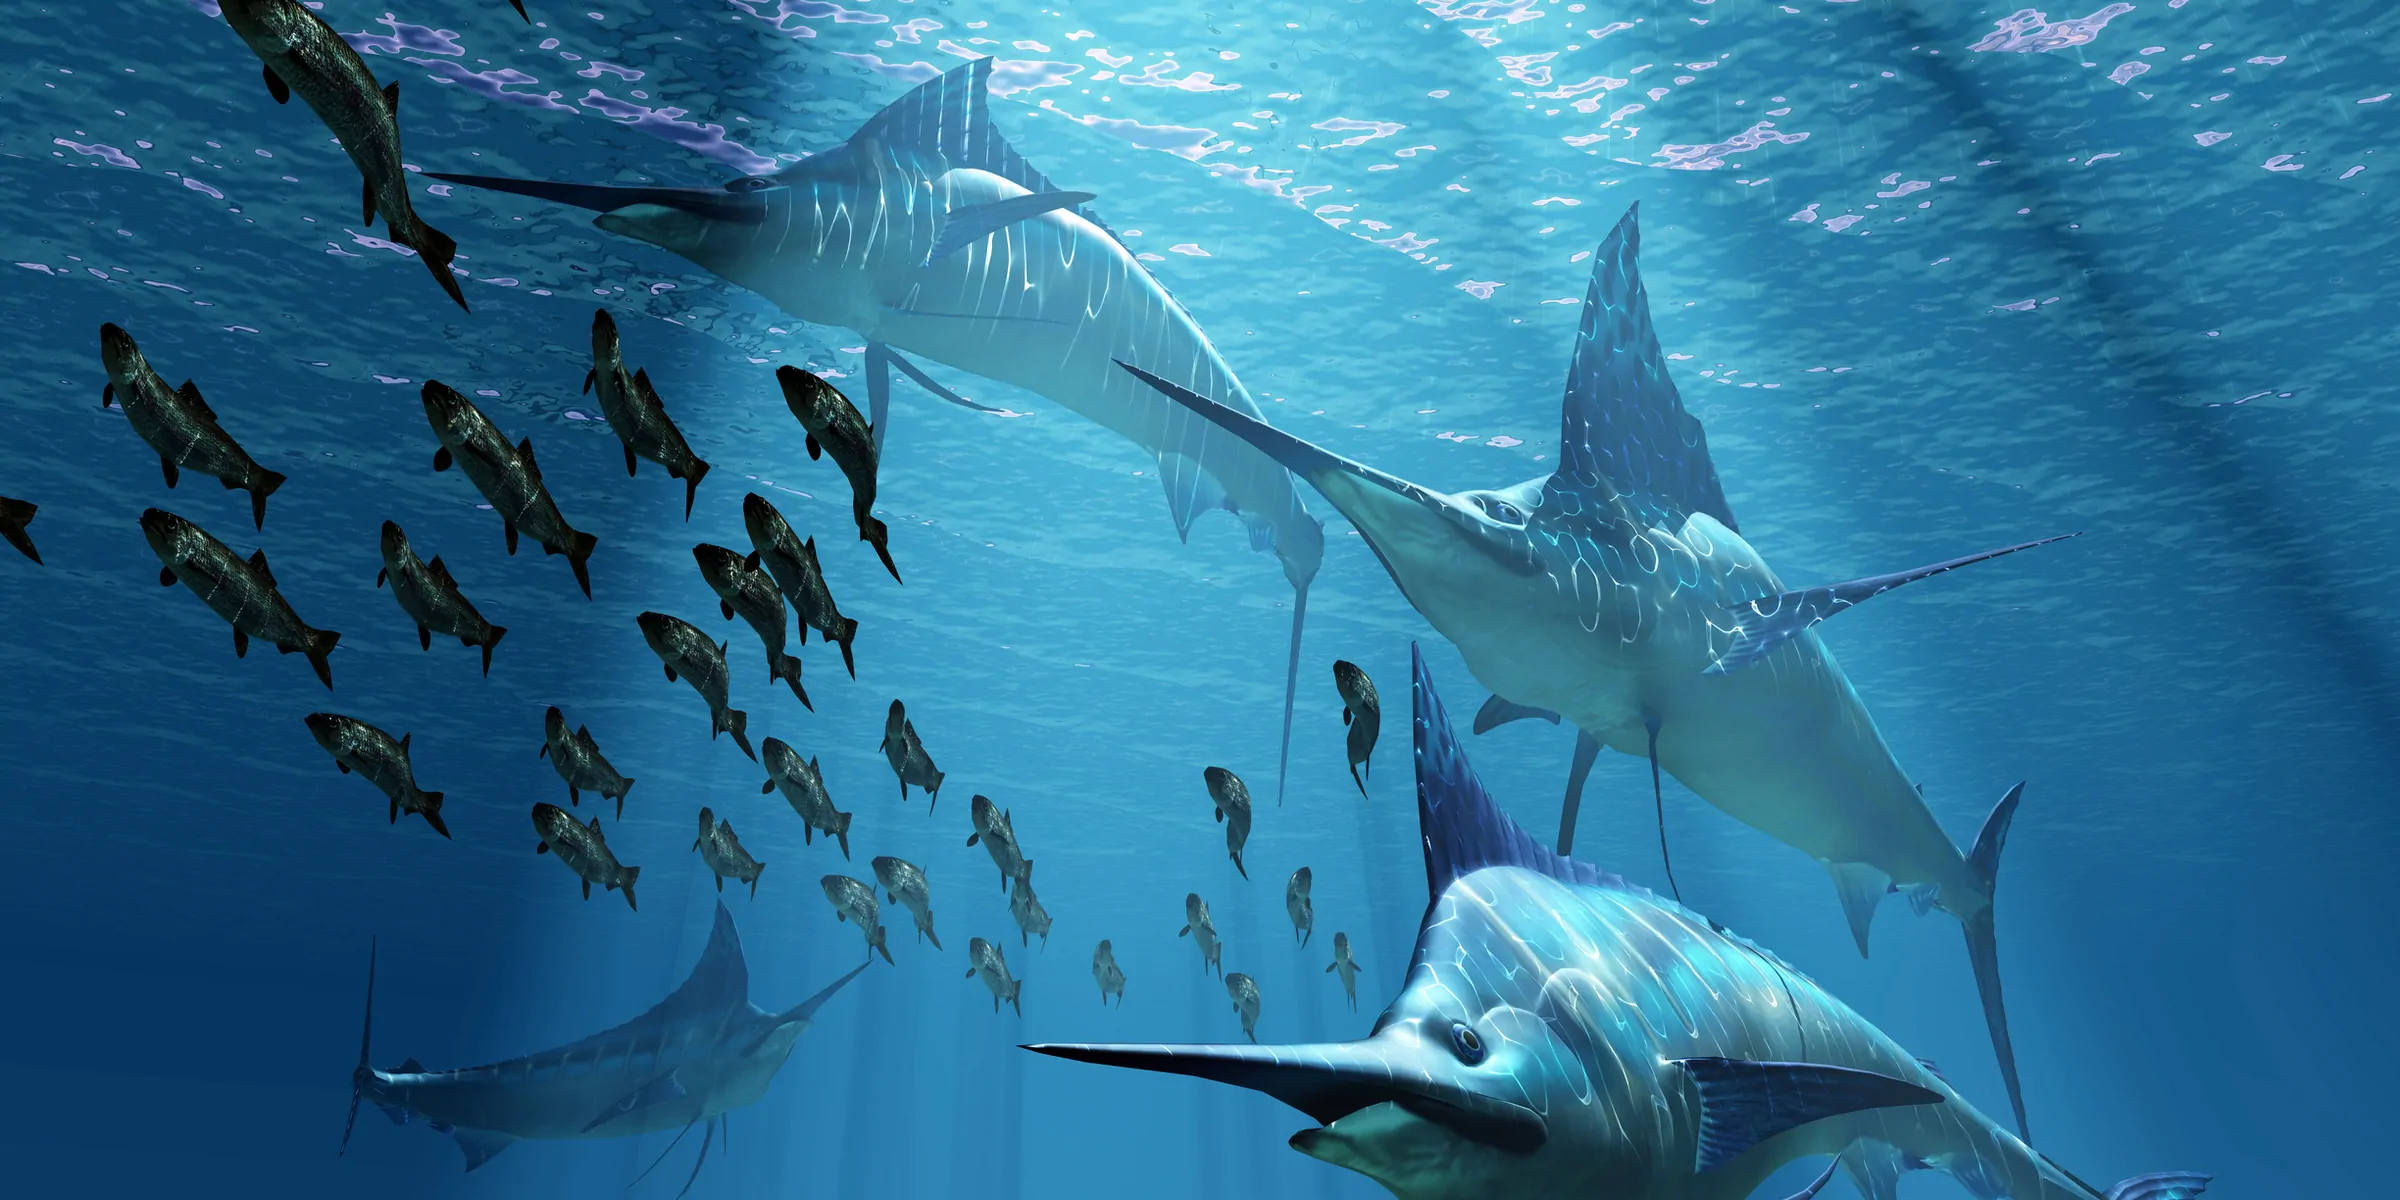 A pack of Blue Marlin predatory fish hunt a school of Herring fish.